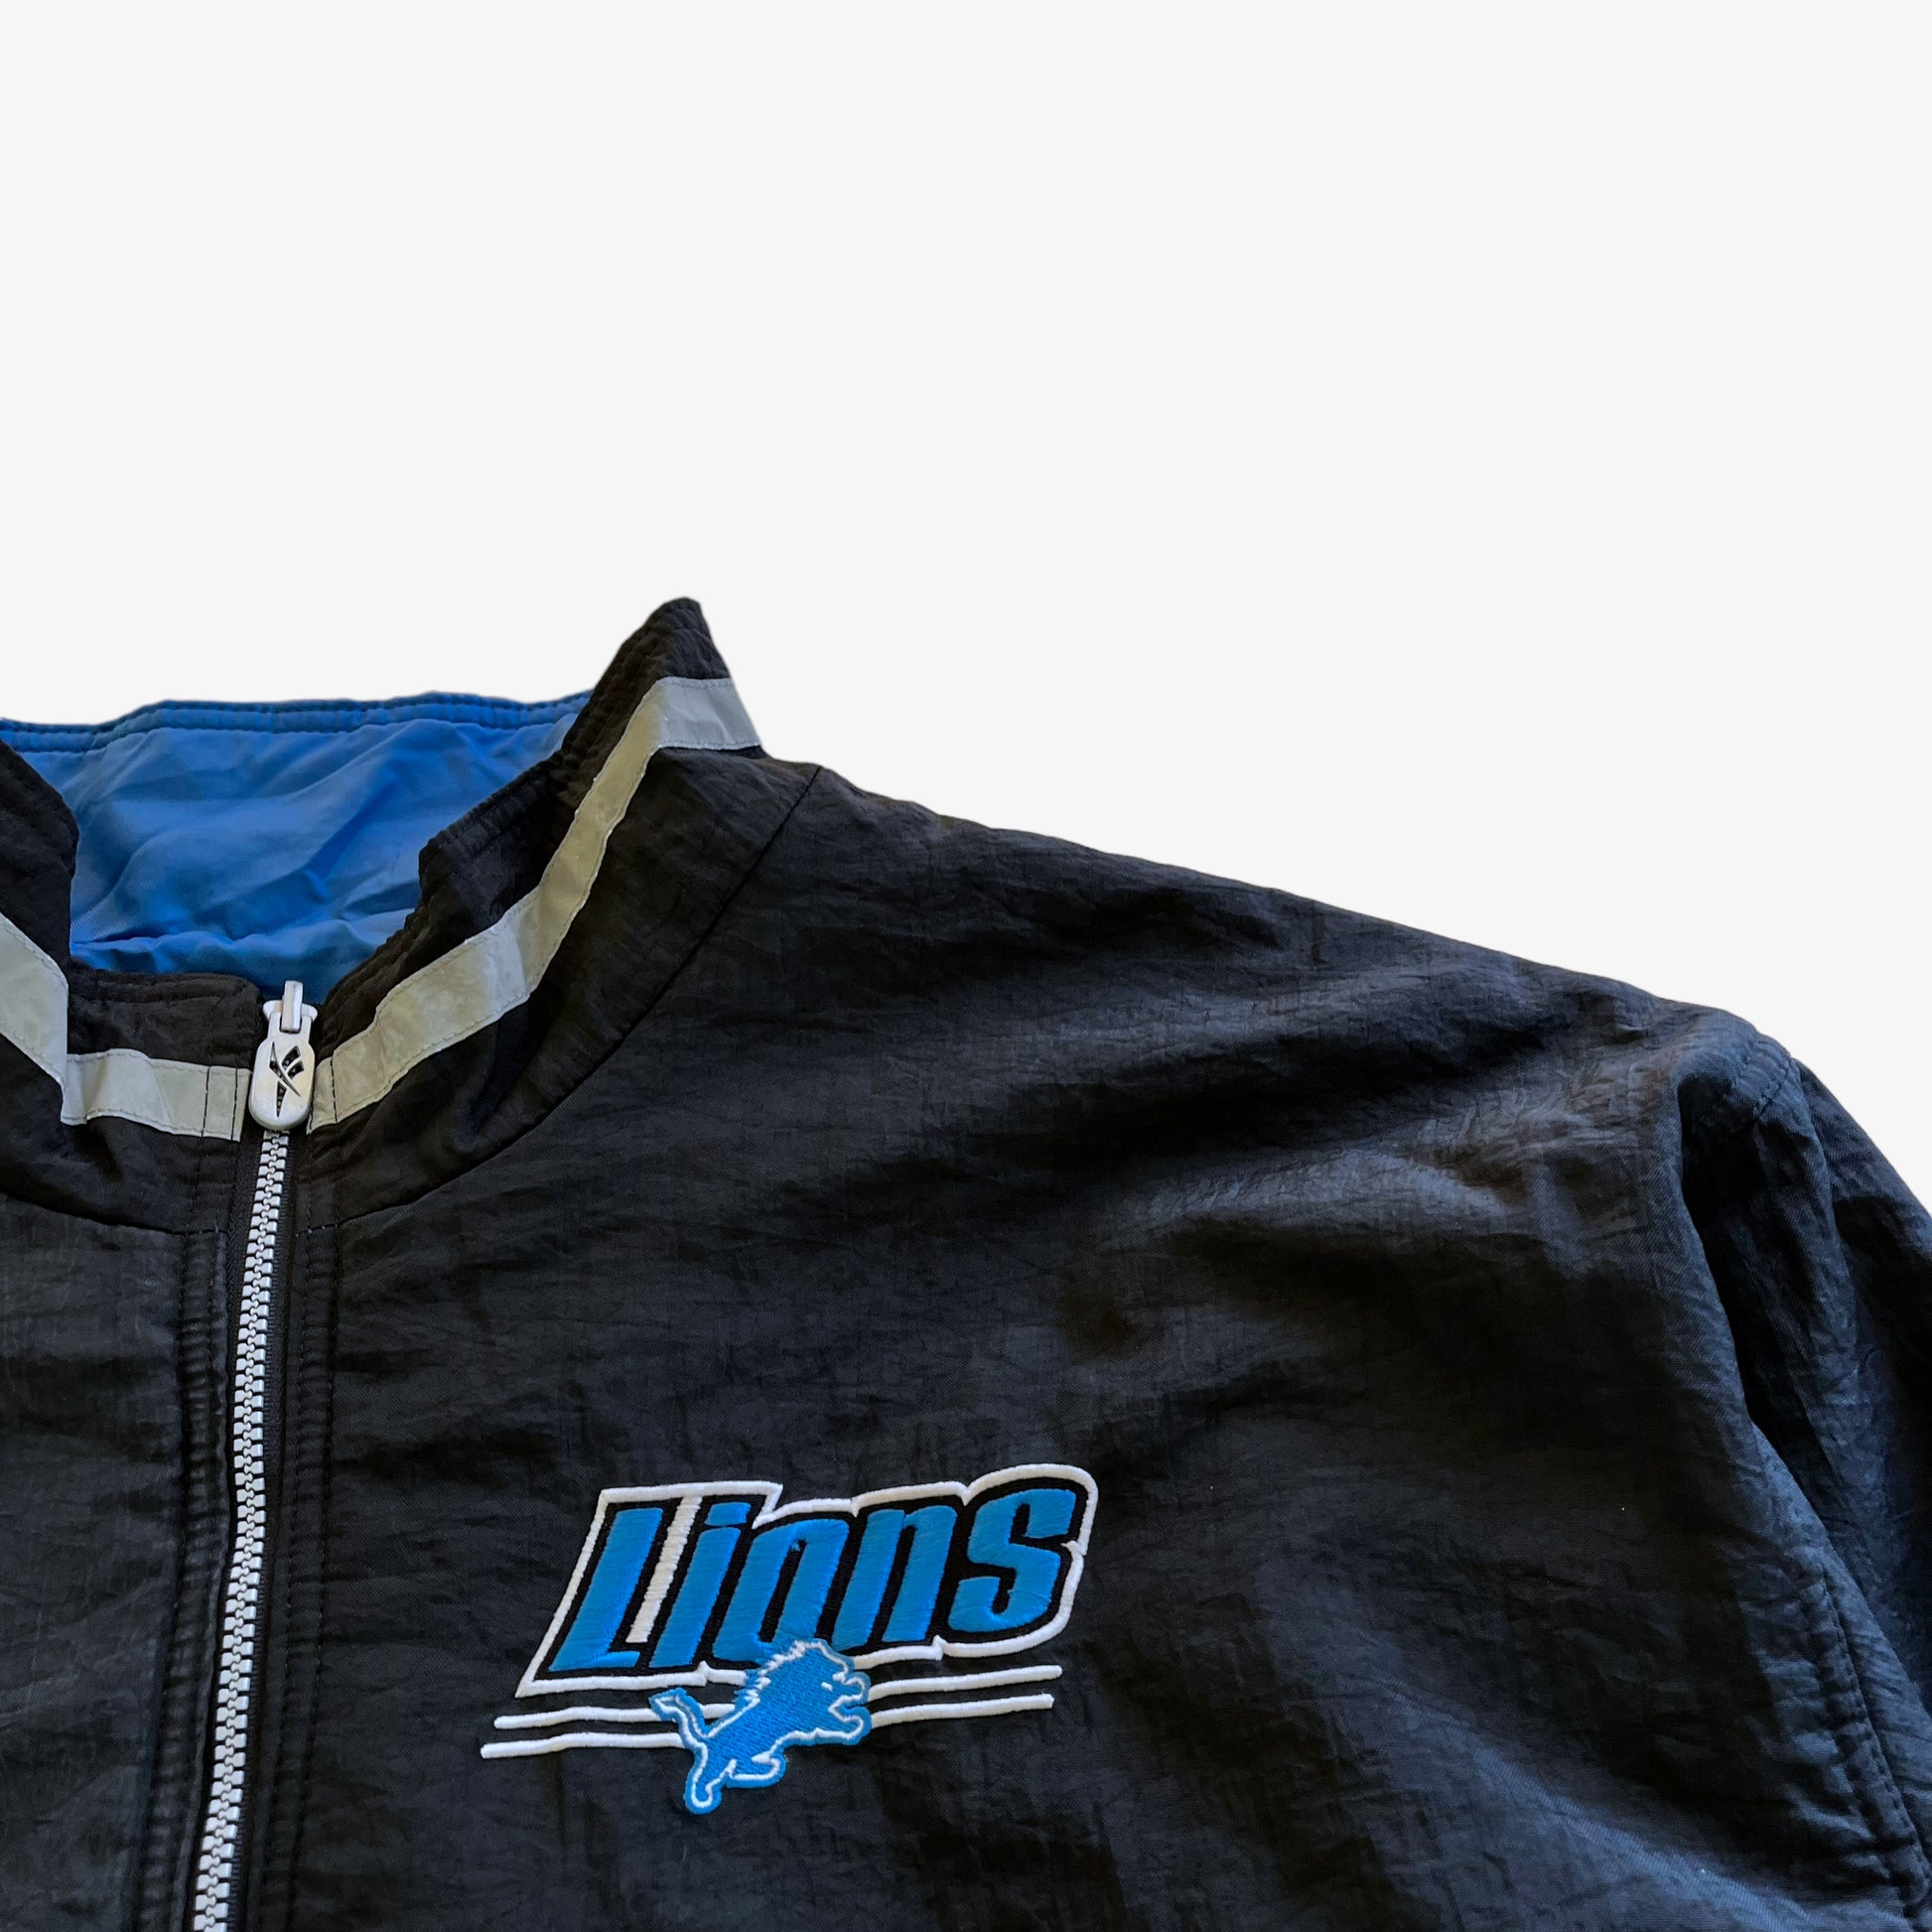 Vintage 90s Reebok NFL Pro Line Detroit Lions Reversible Jacket With Back Spell Out Logo - Casspios Dream